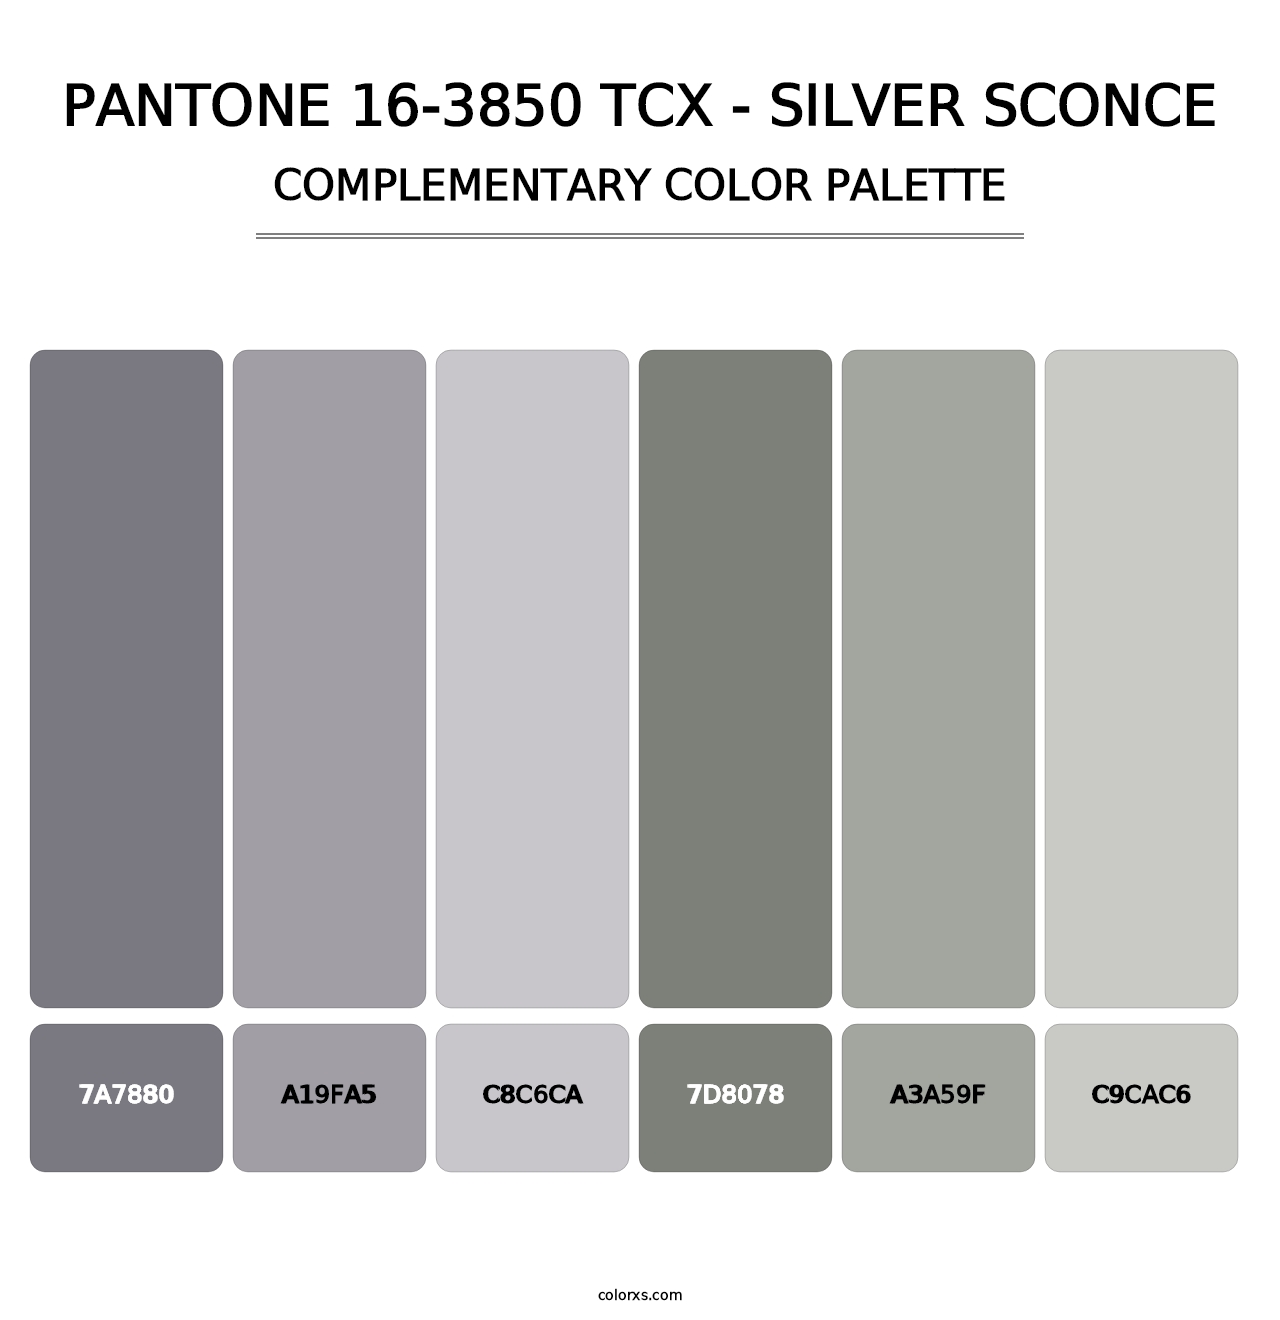 PANTONE 16-3850 TCX - Silver Sconce - Complementary Color Palette